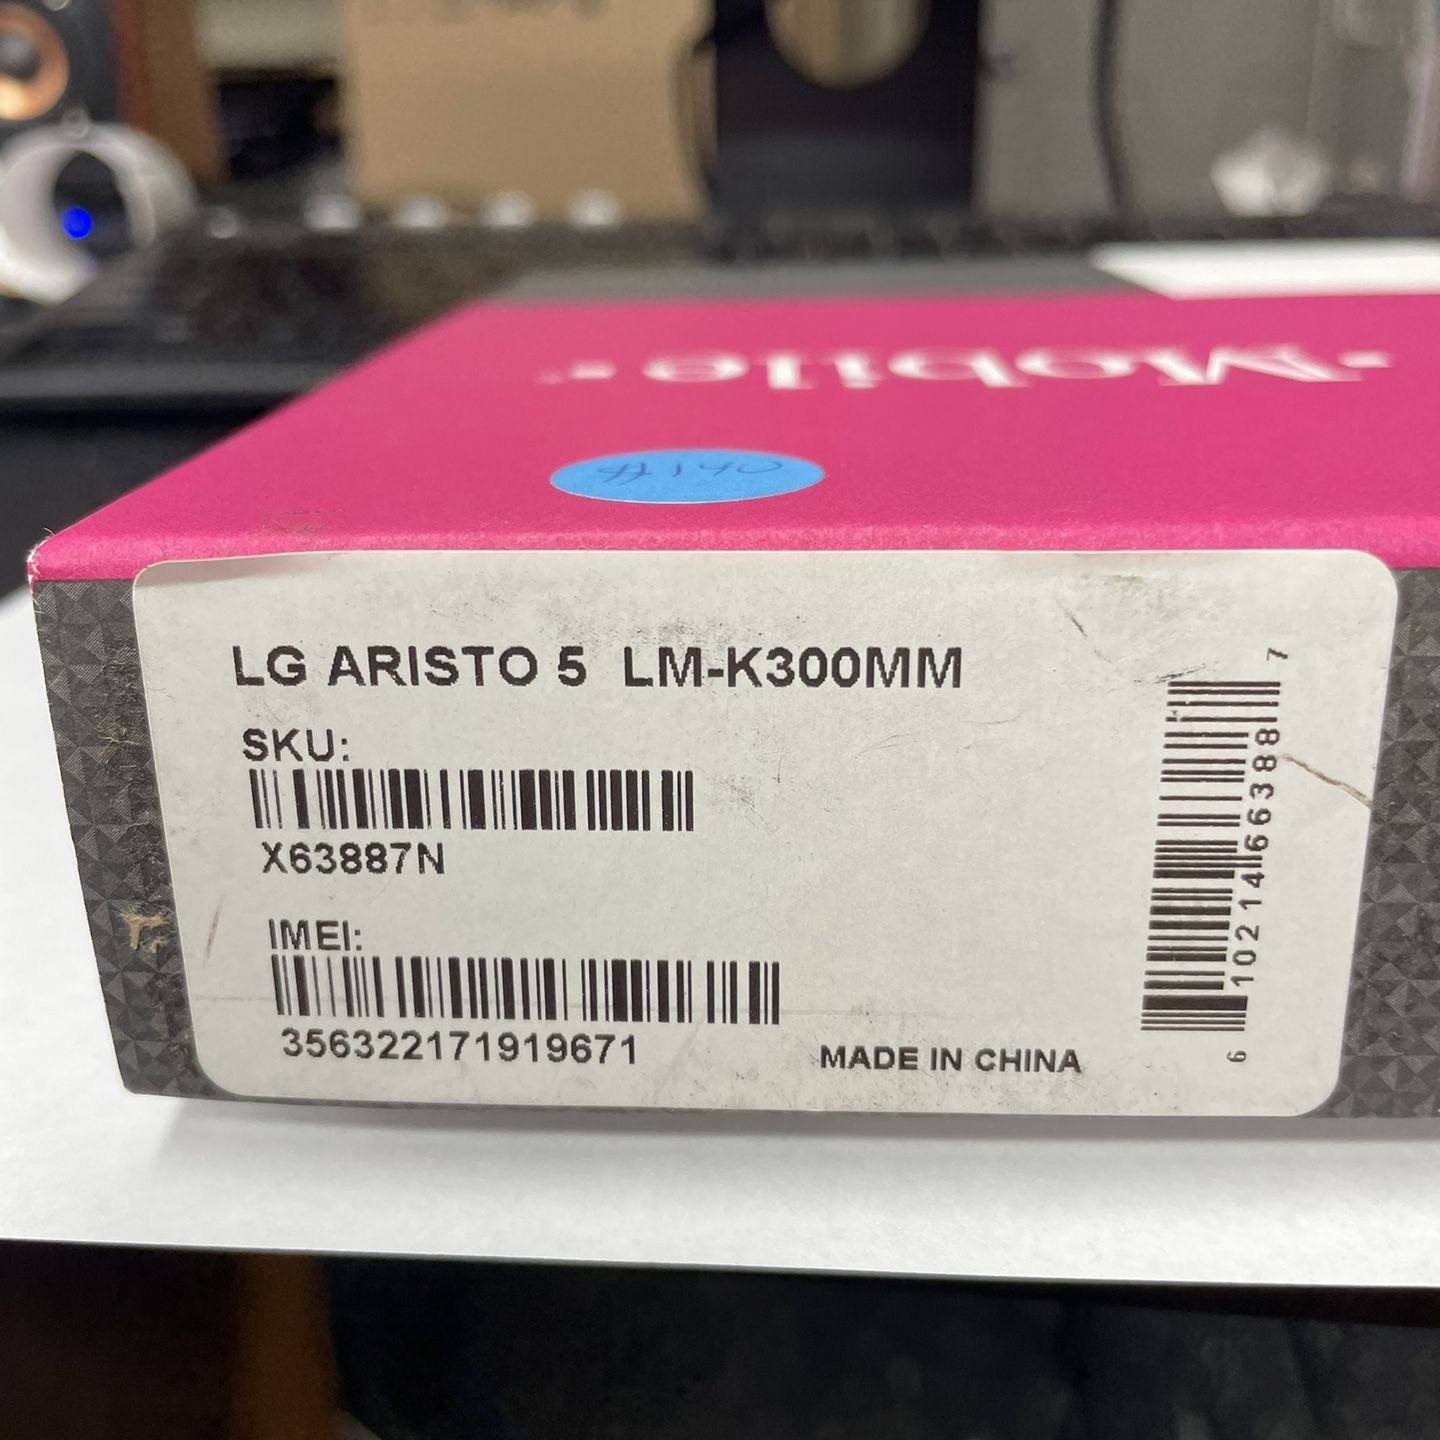 lg aristo 5 lm-k300mm unlocked cell phone new